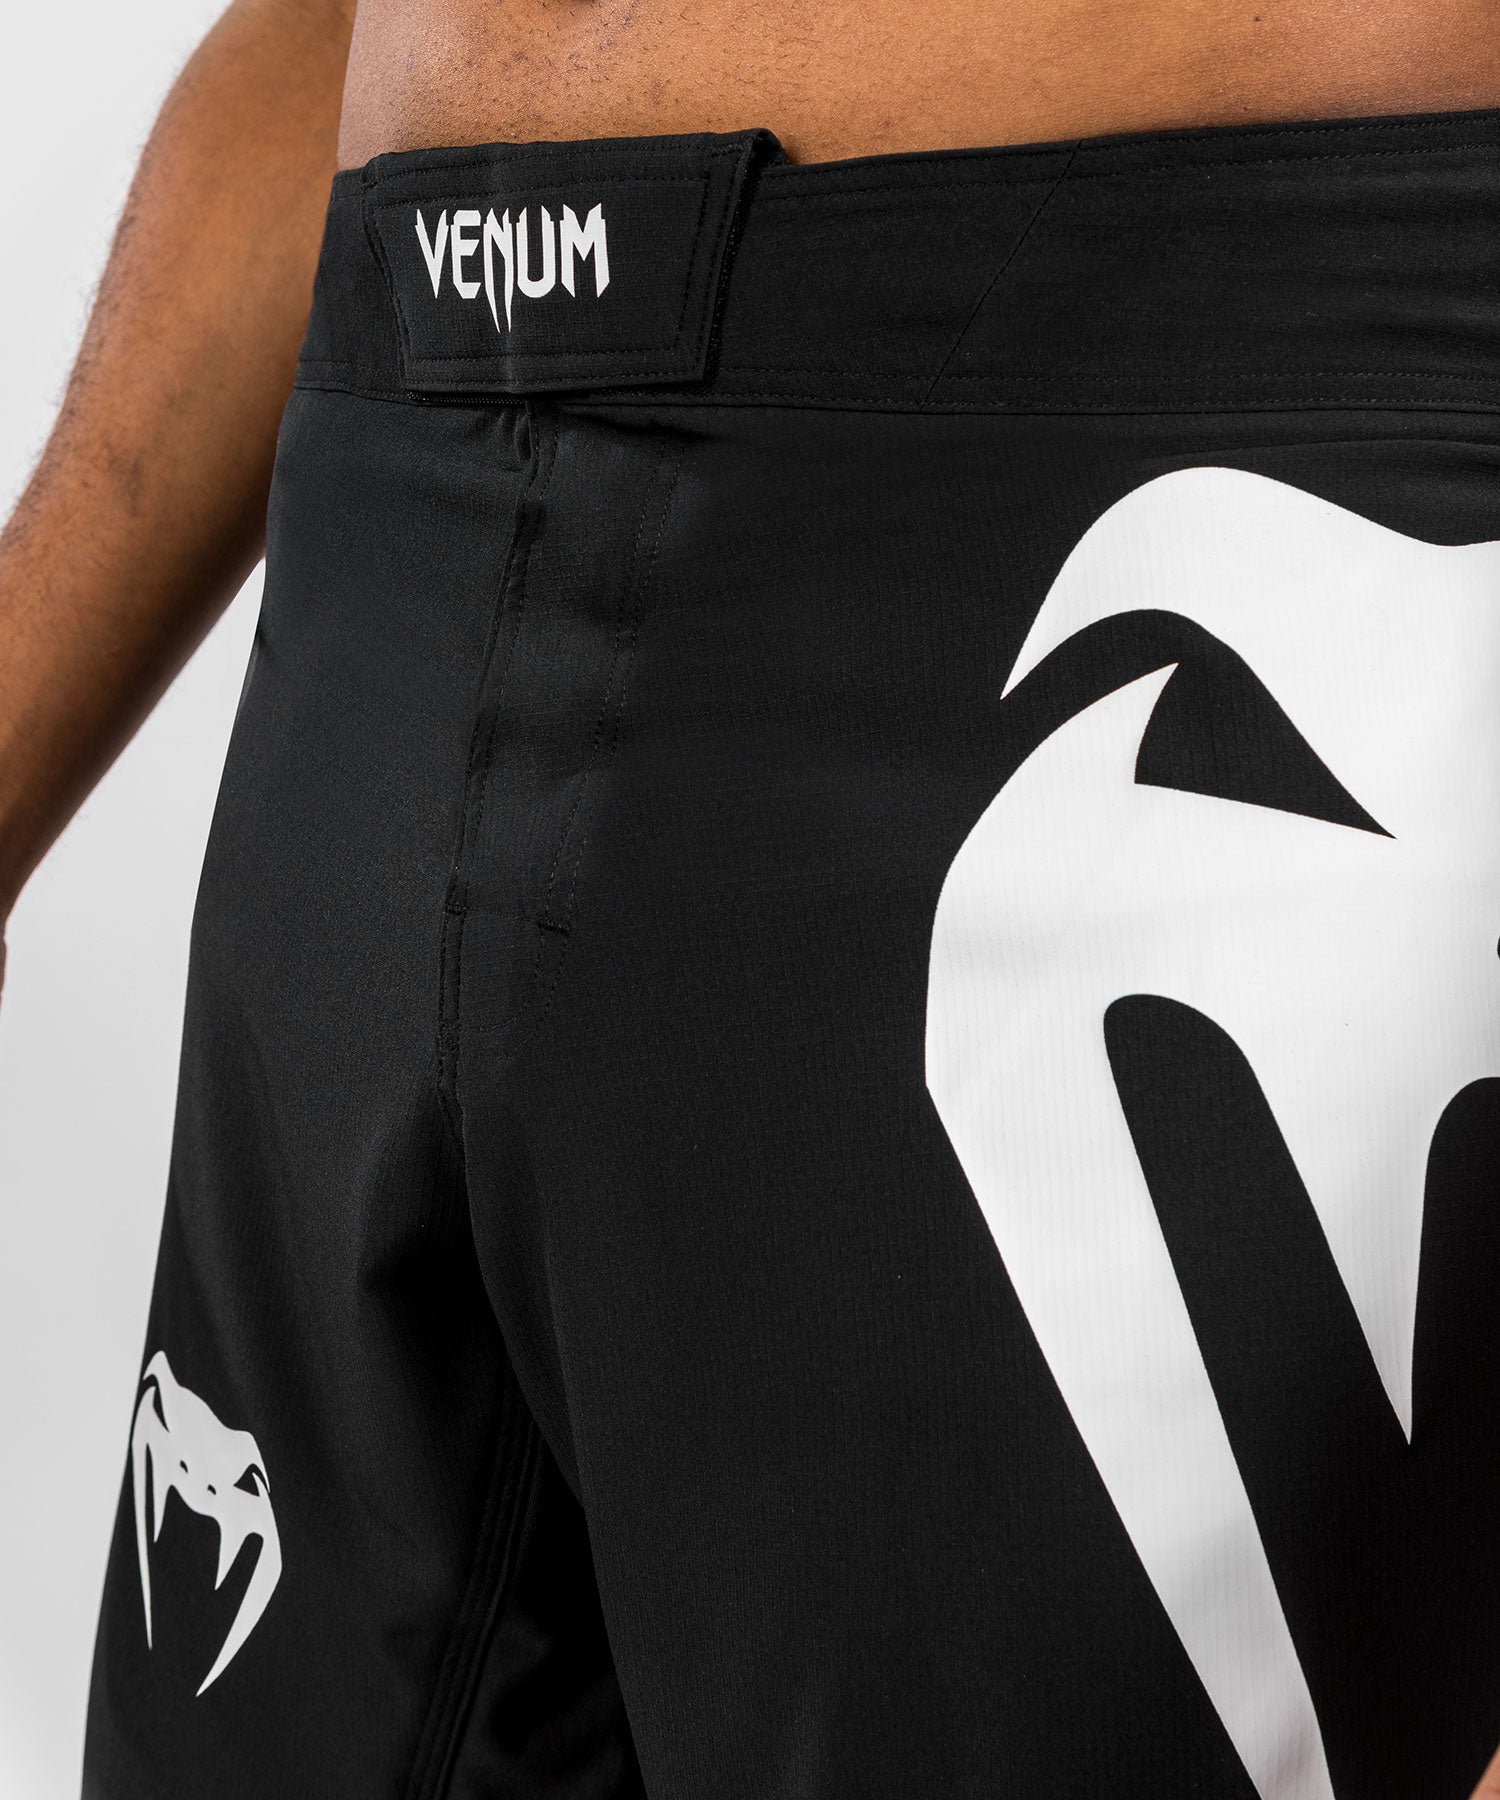 Venum Light 5.0 ファイトショーツ - ブラック/ホワイト